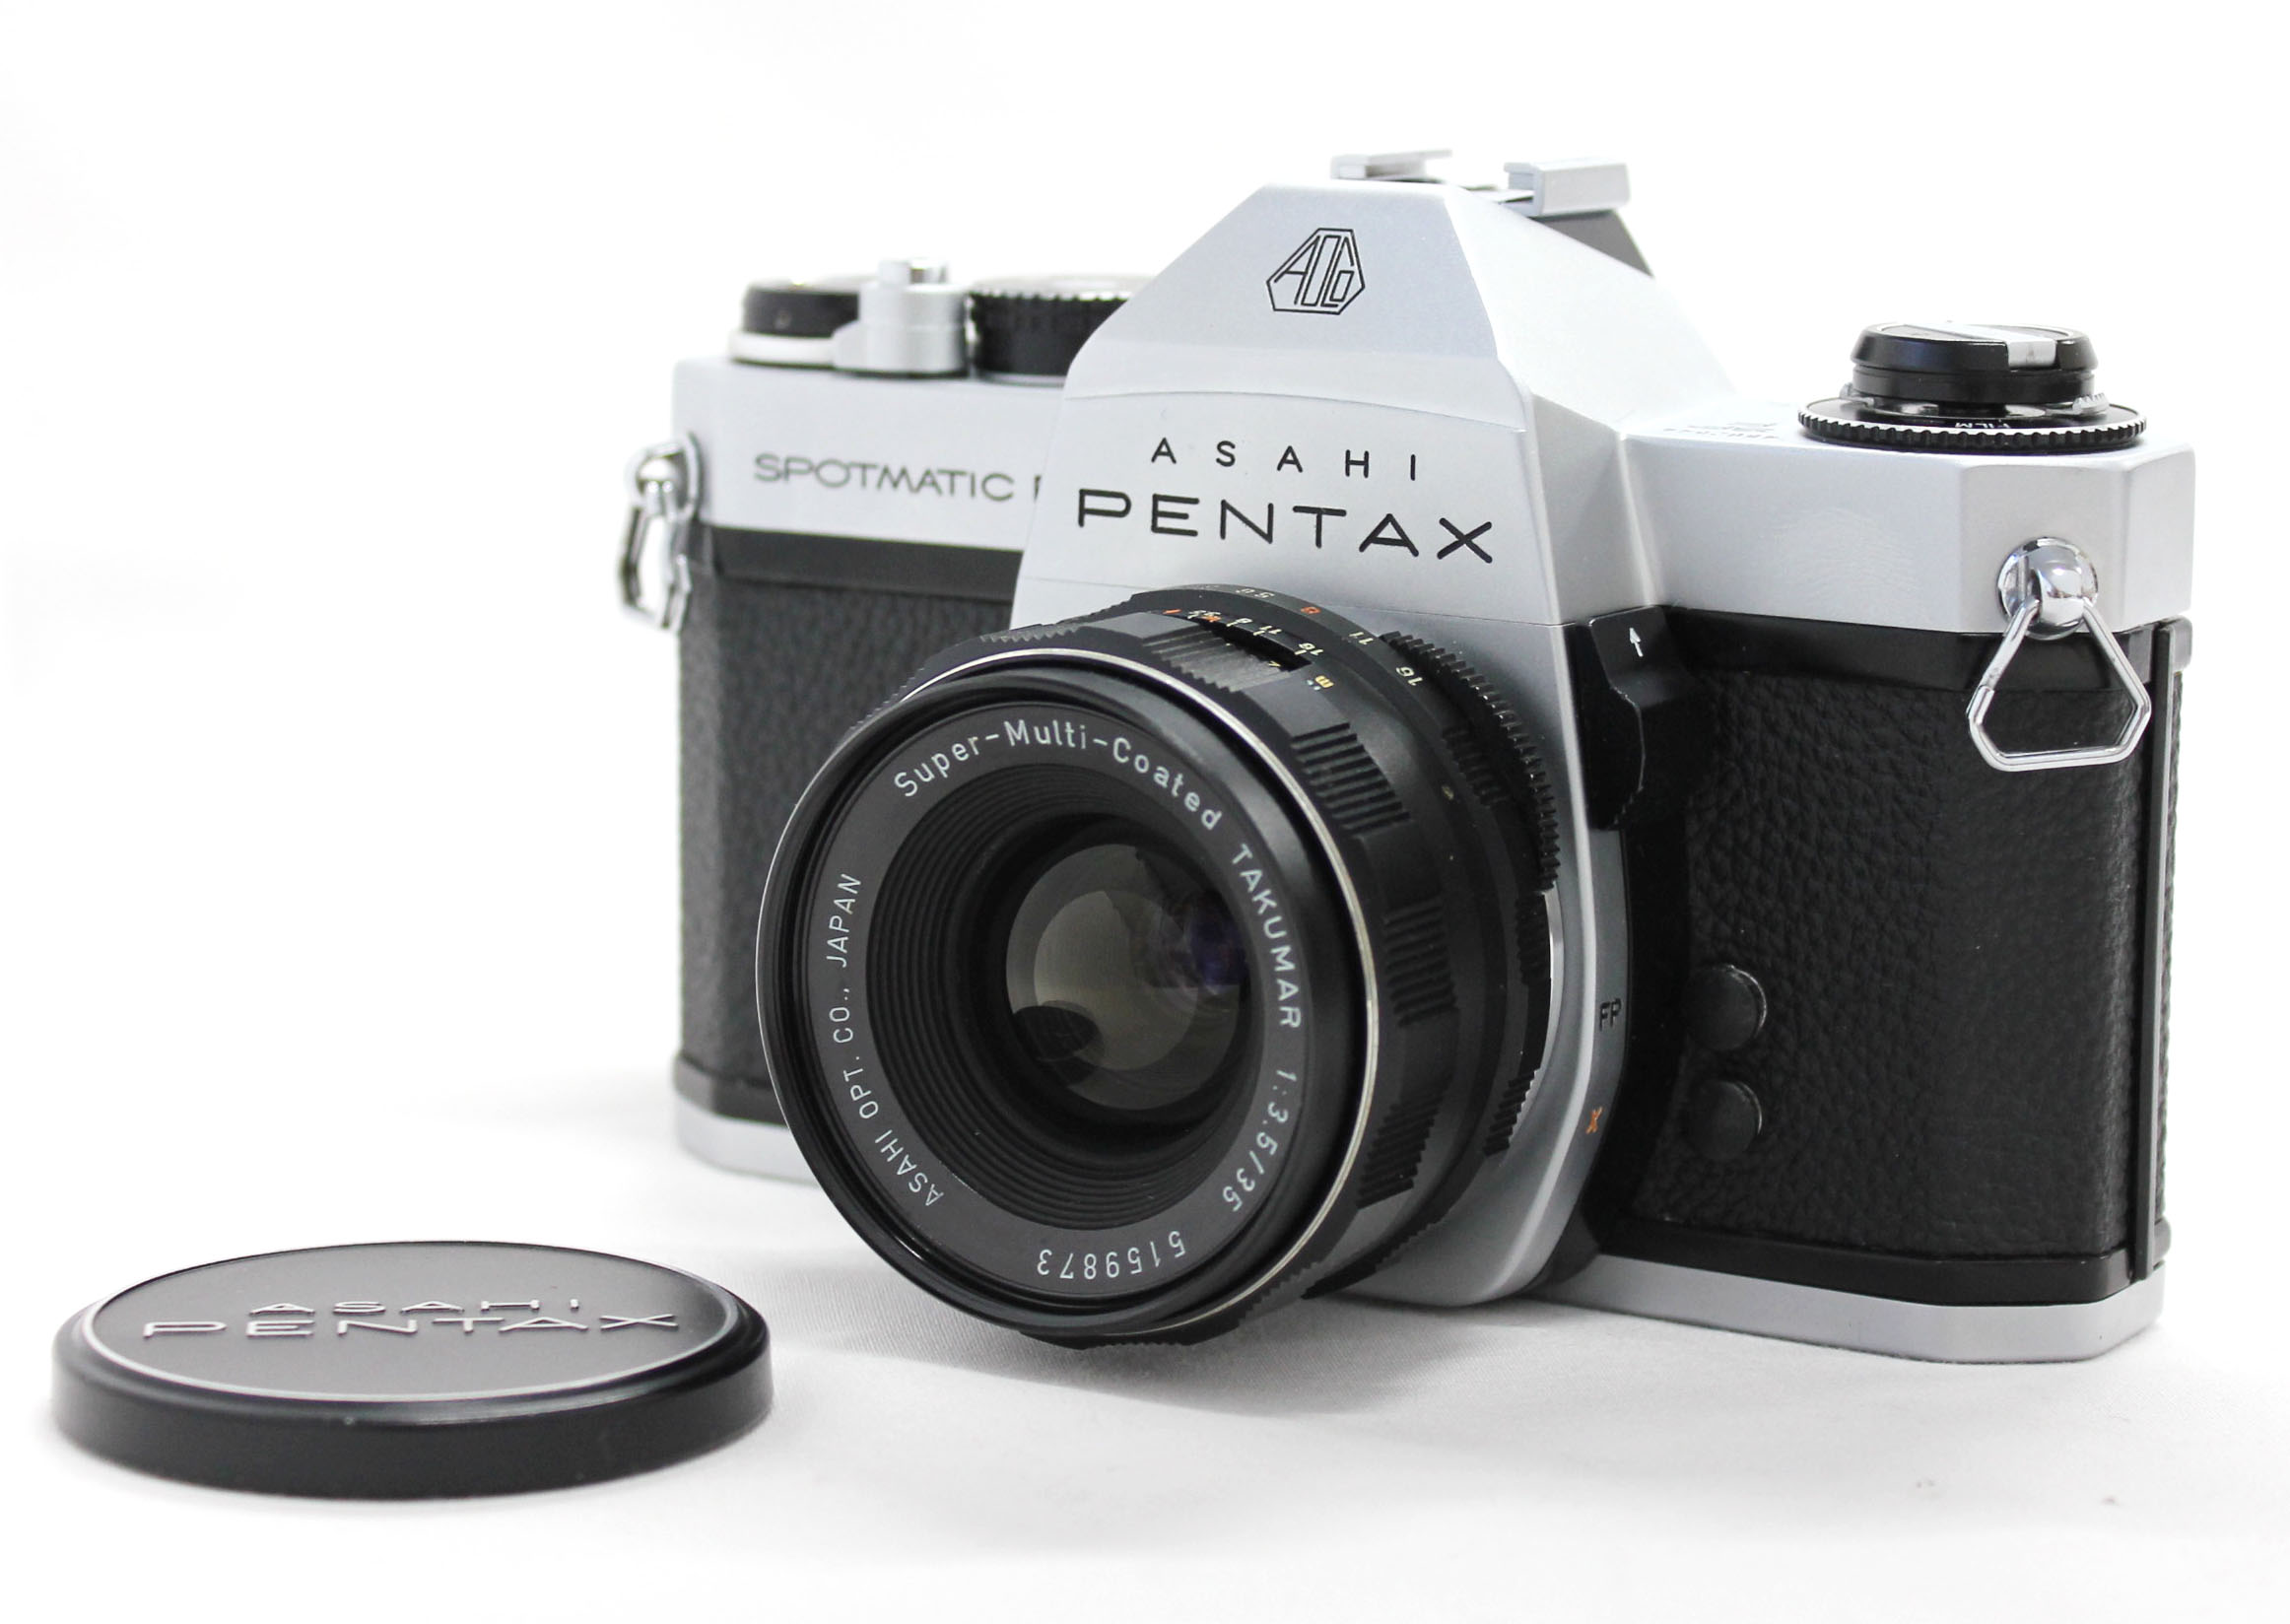 Japan Used Camera Shop | Asahi Pentax Spotmatic F SPF 35mm SLR Camera w/ SMC Super-Multi-Coated Takumar 35mm F/3.5 Lens from Japan